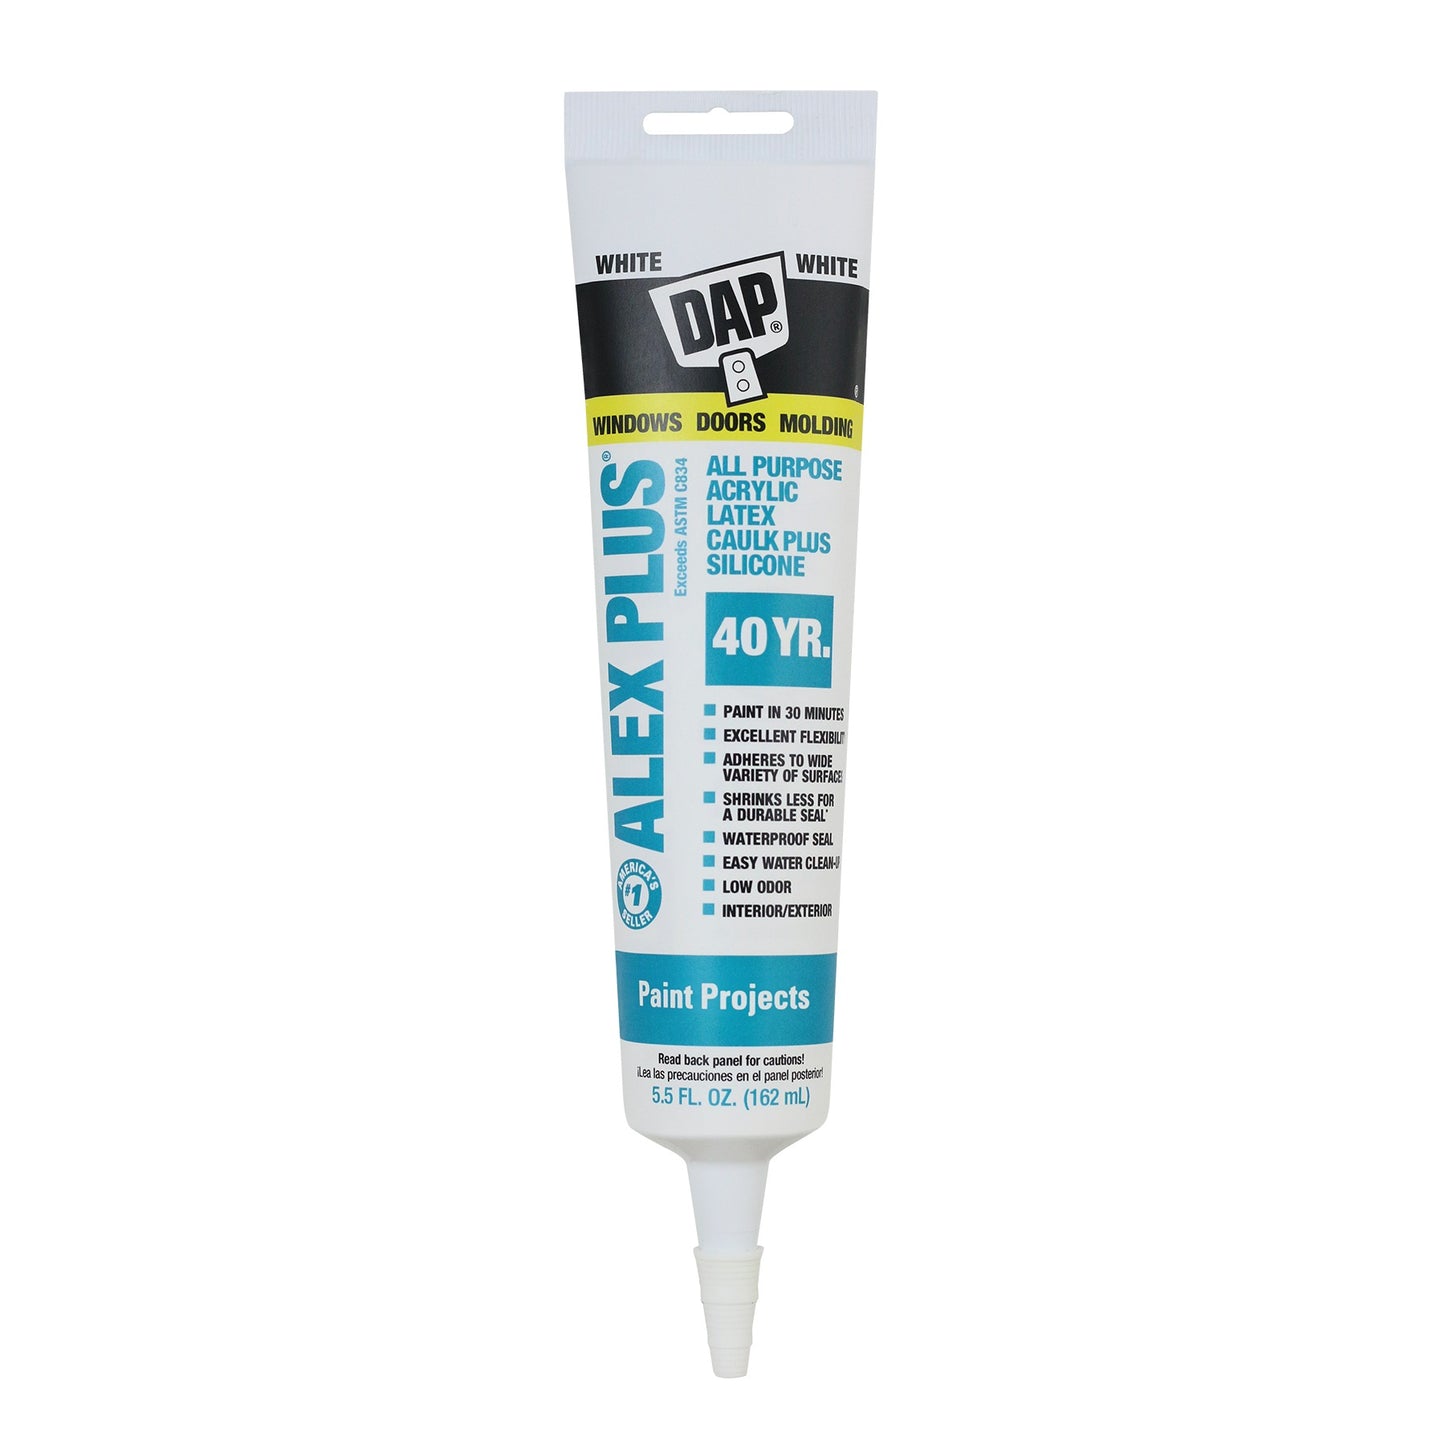 Dap Alex Plus® All Purpose Acrylic Latex Caulk Plus Silicone White 5.5 FL OZ